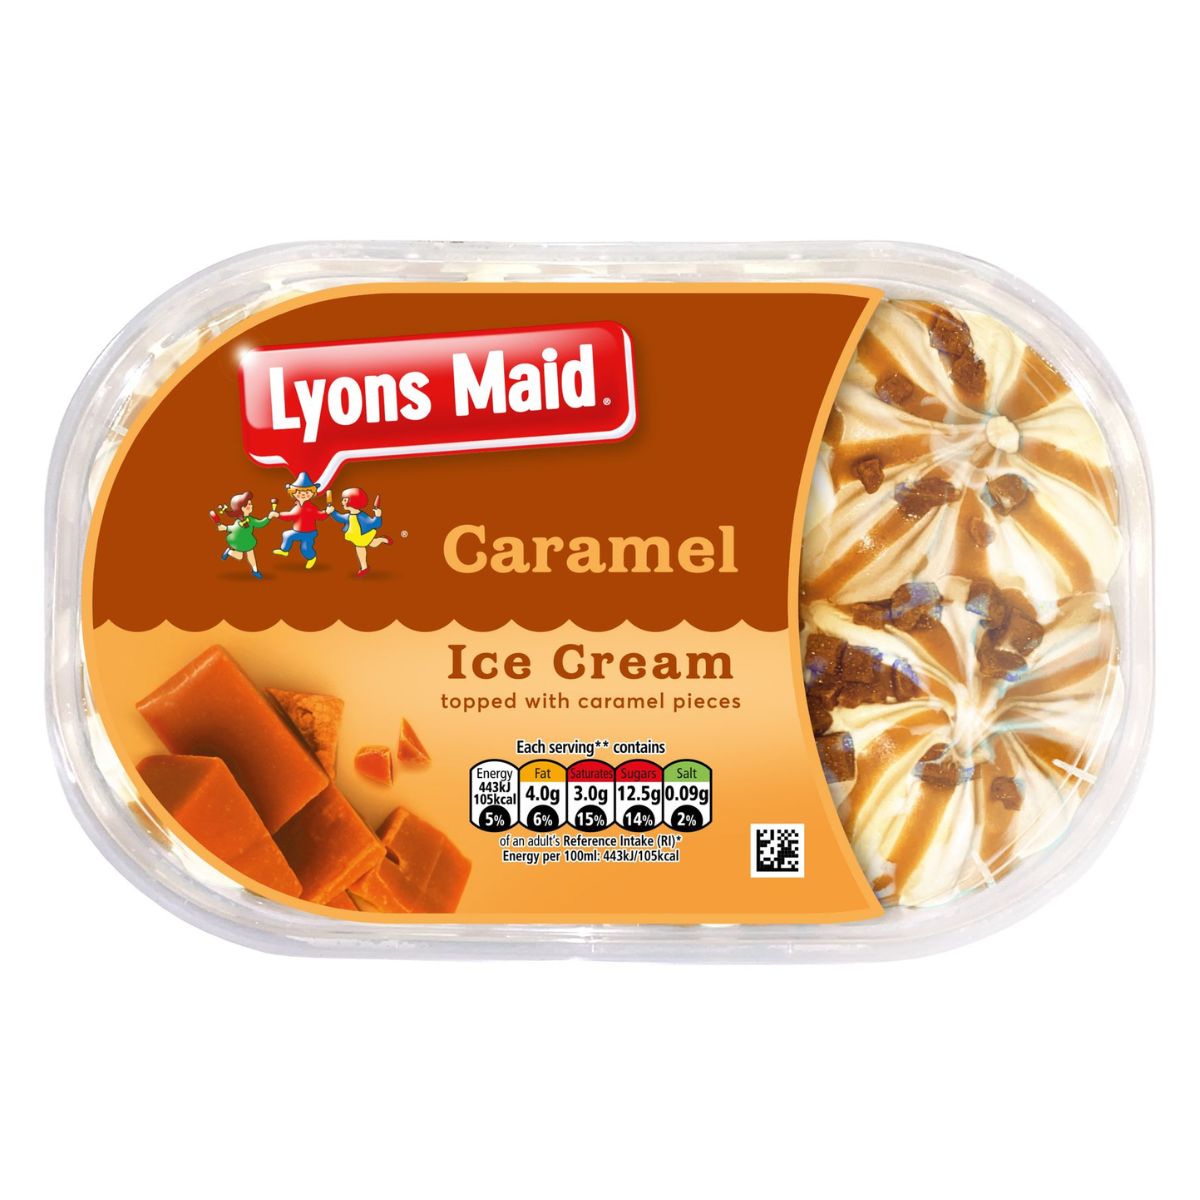 Lyons Maid - Caramel Ice Cream - 900ml.